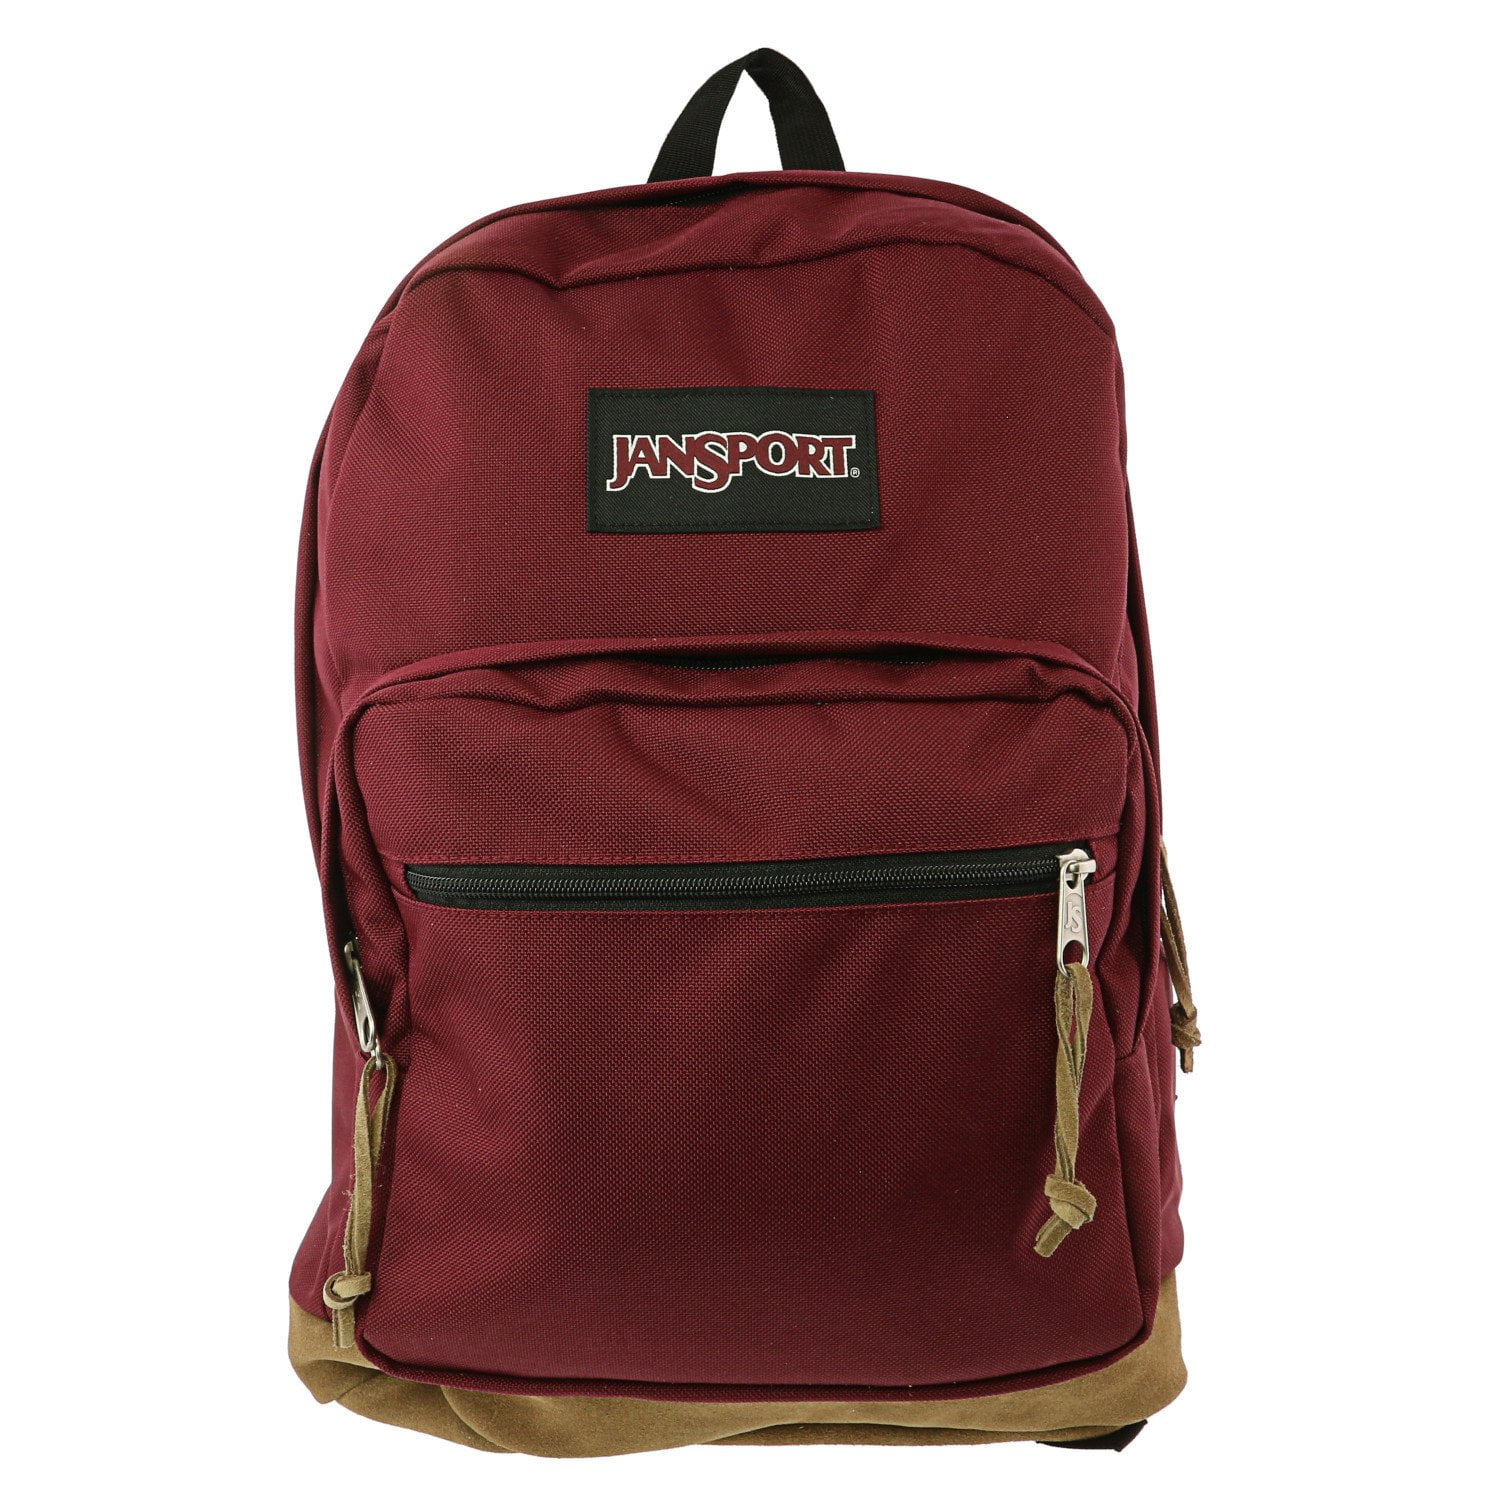 Jansport Men's Right Pack Polyester Backpack - Russet Red